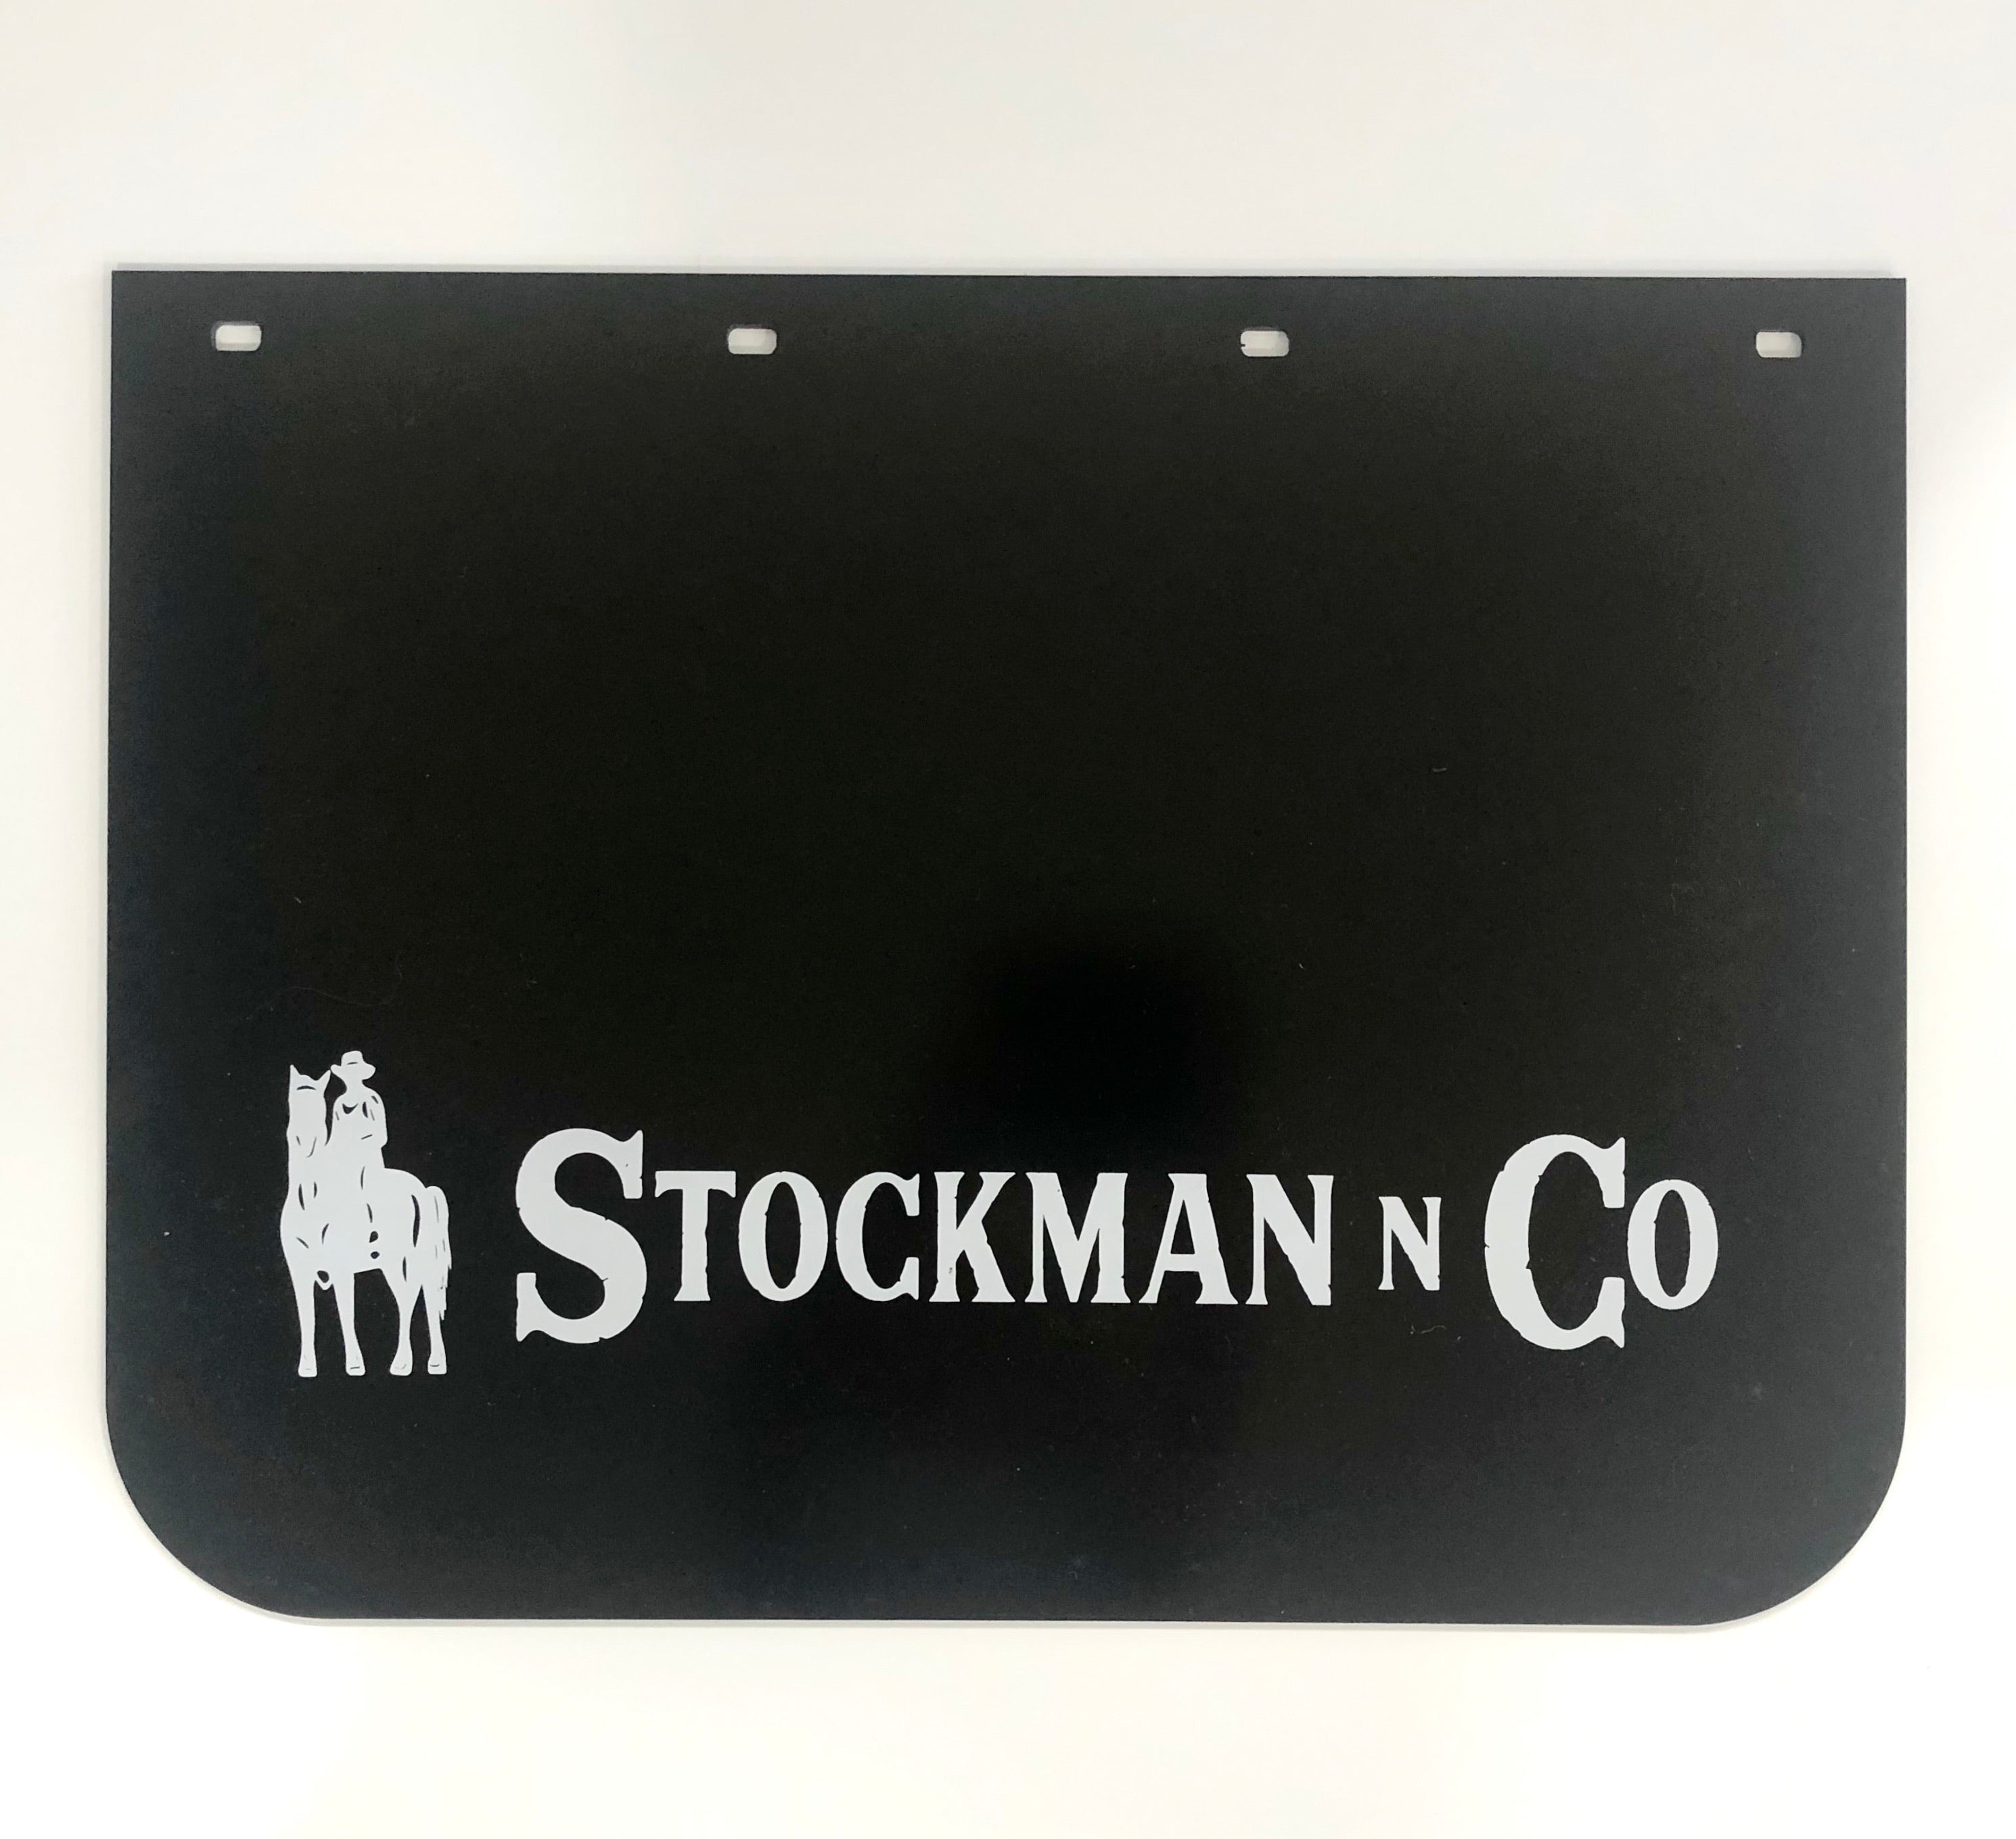 Stockman Truck Mudflaps - STOCKMAN N CO